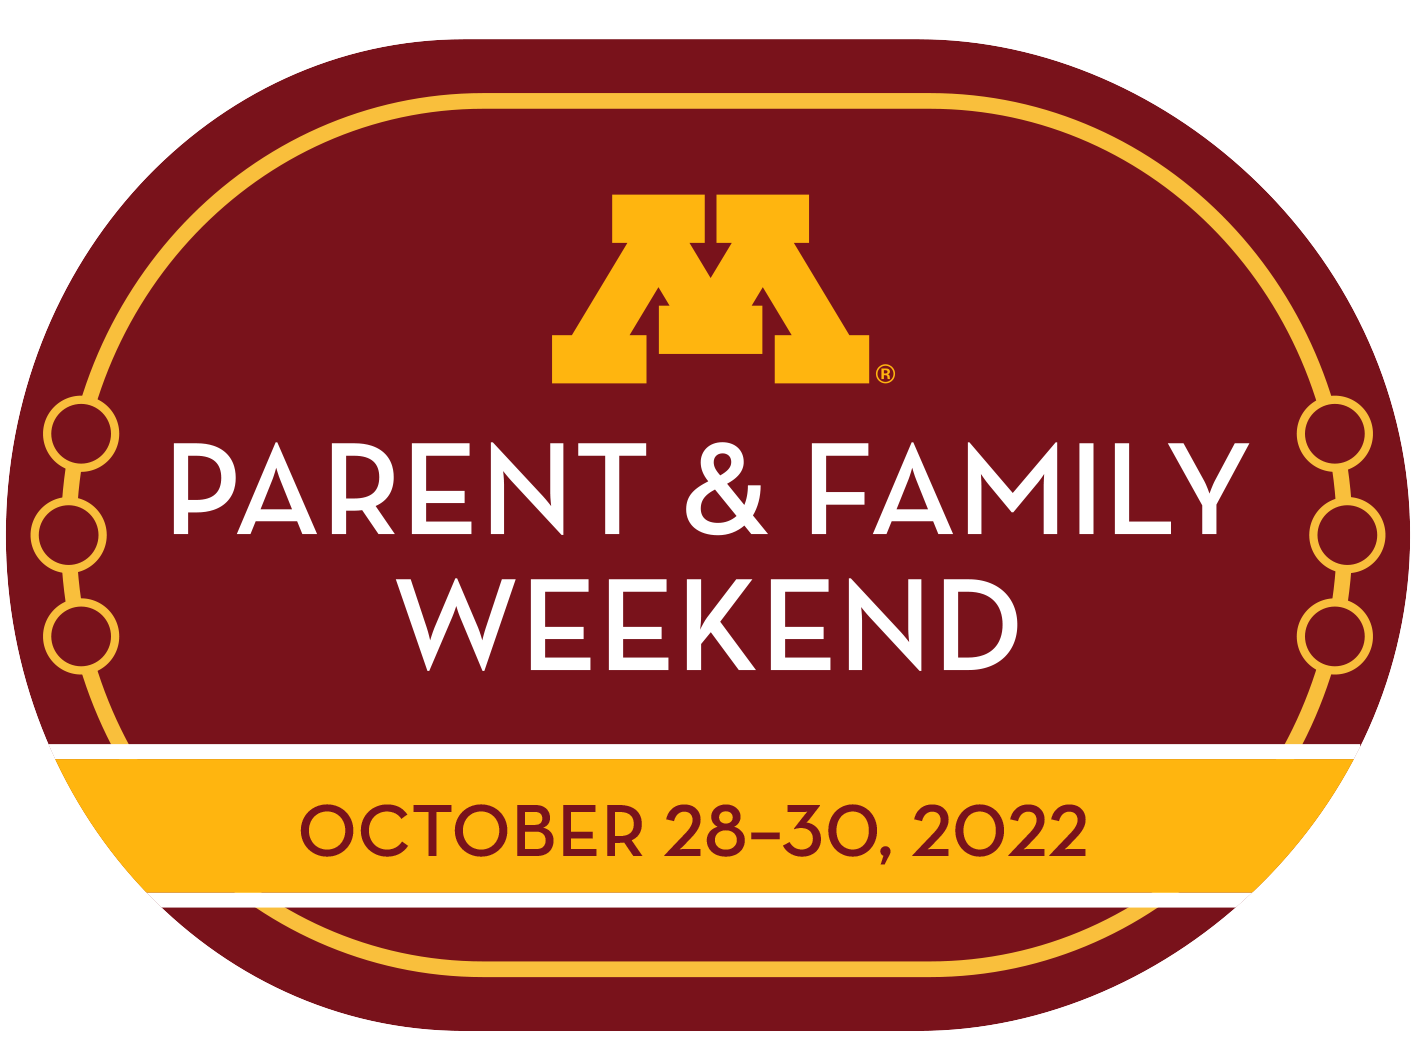 Parent & Family Weekend 2022 logo